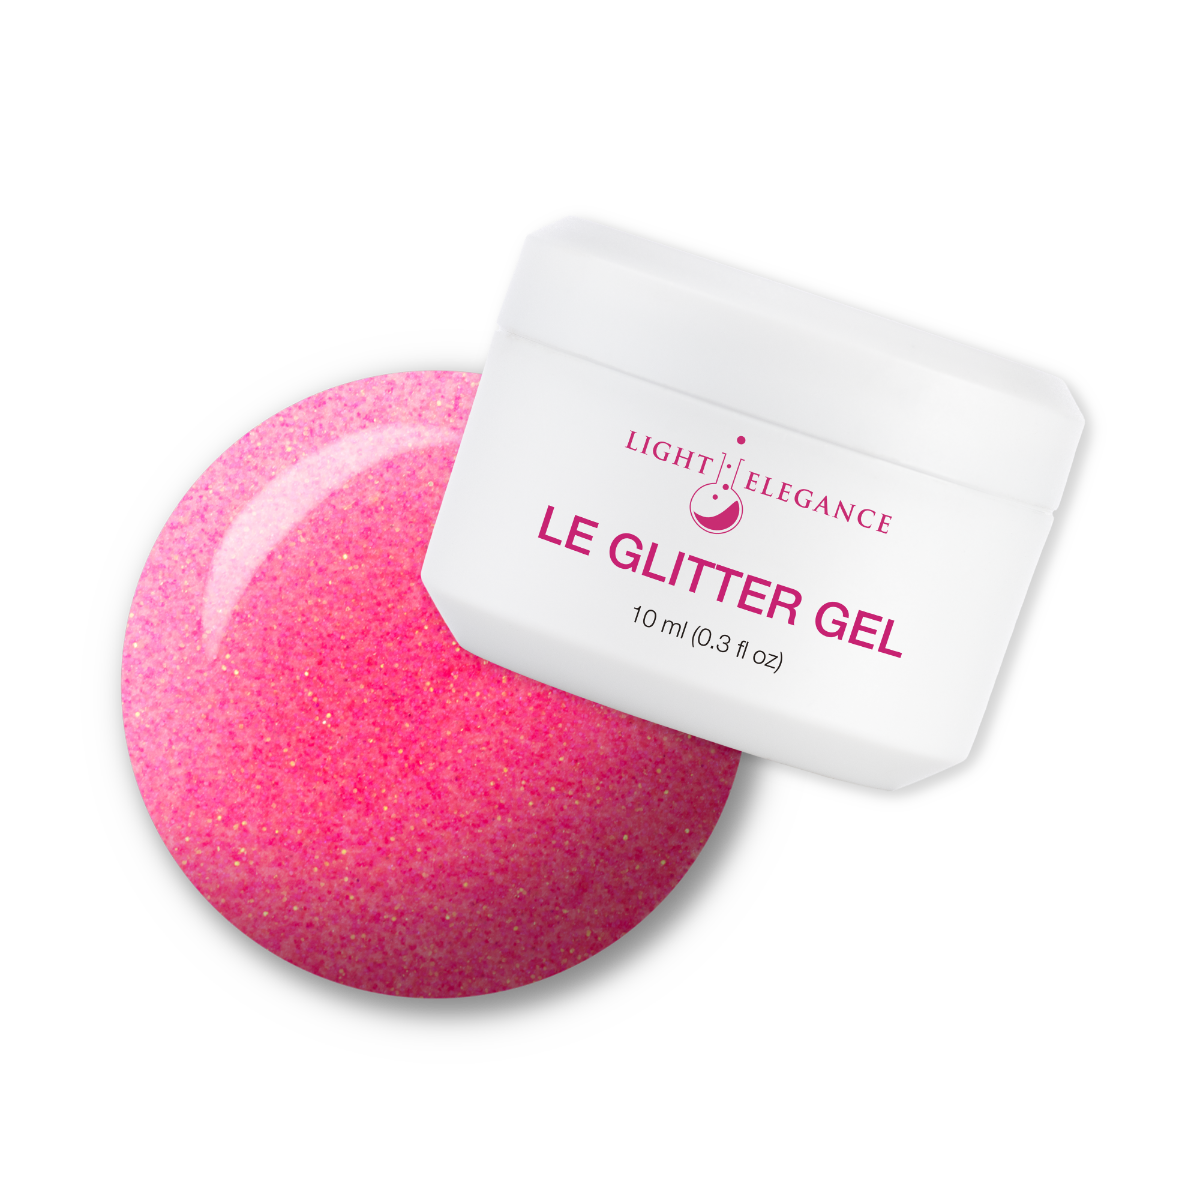 Light Elegance Glitter Gel - Wild Child :: New Packaging - Creata Beauty - Professional Beauty Products